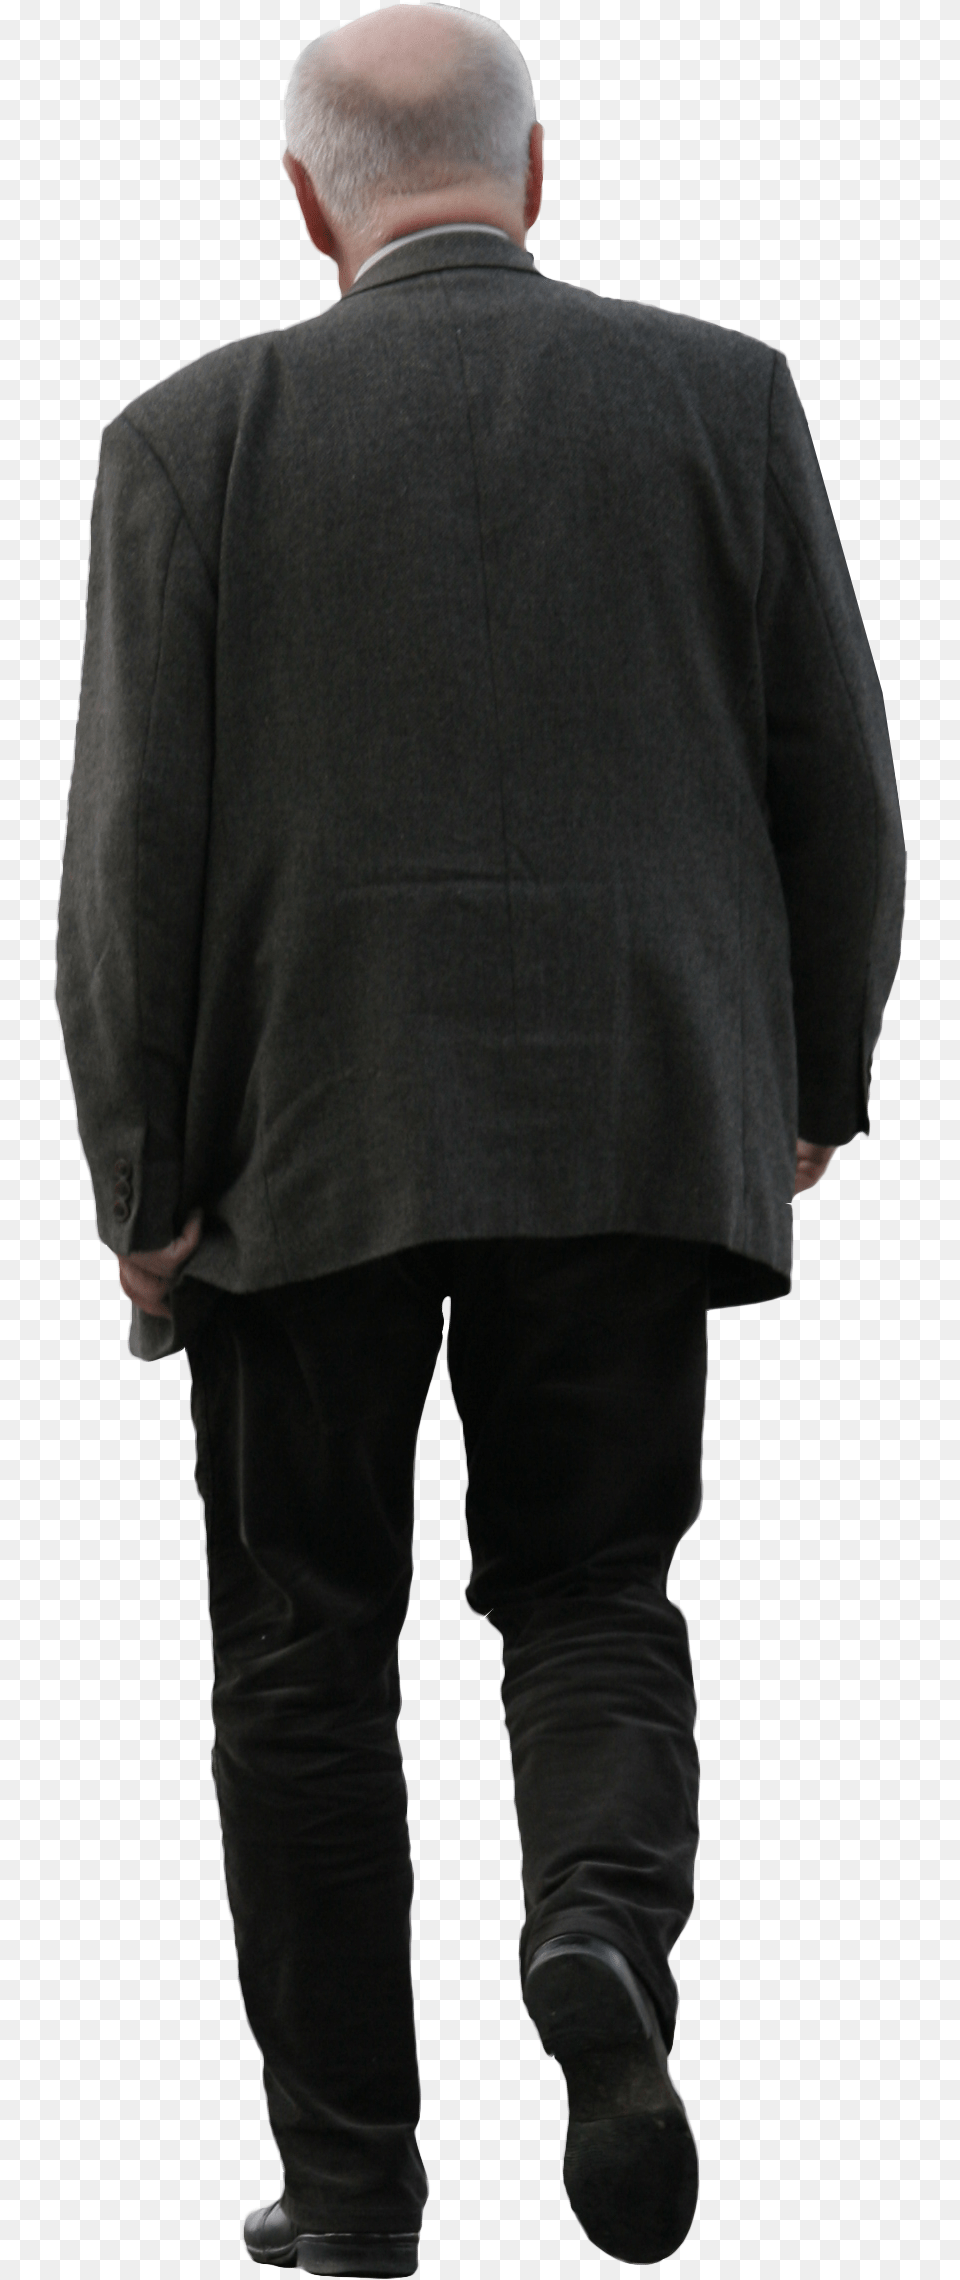 Walking Old Man 2d Cutout People, Blazer, Clothing, Coat, Jacket Png Image